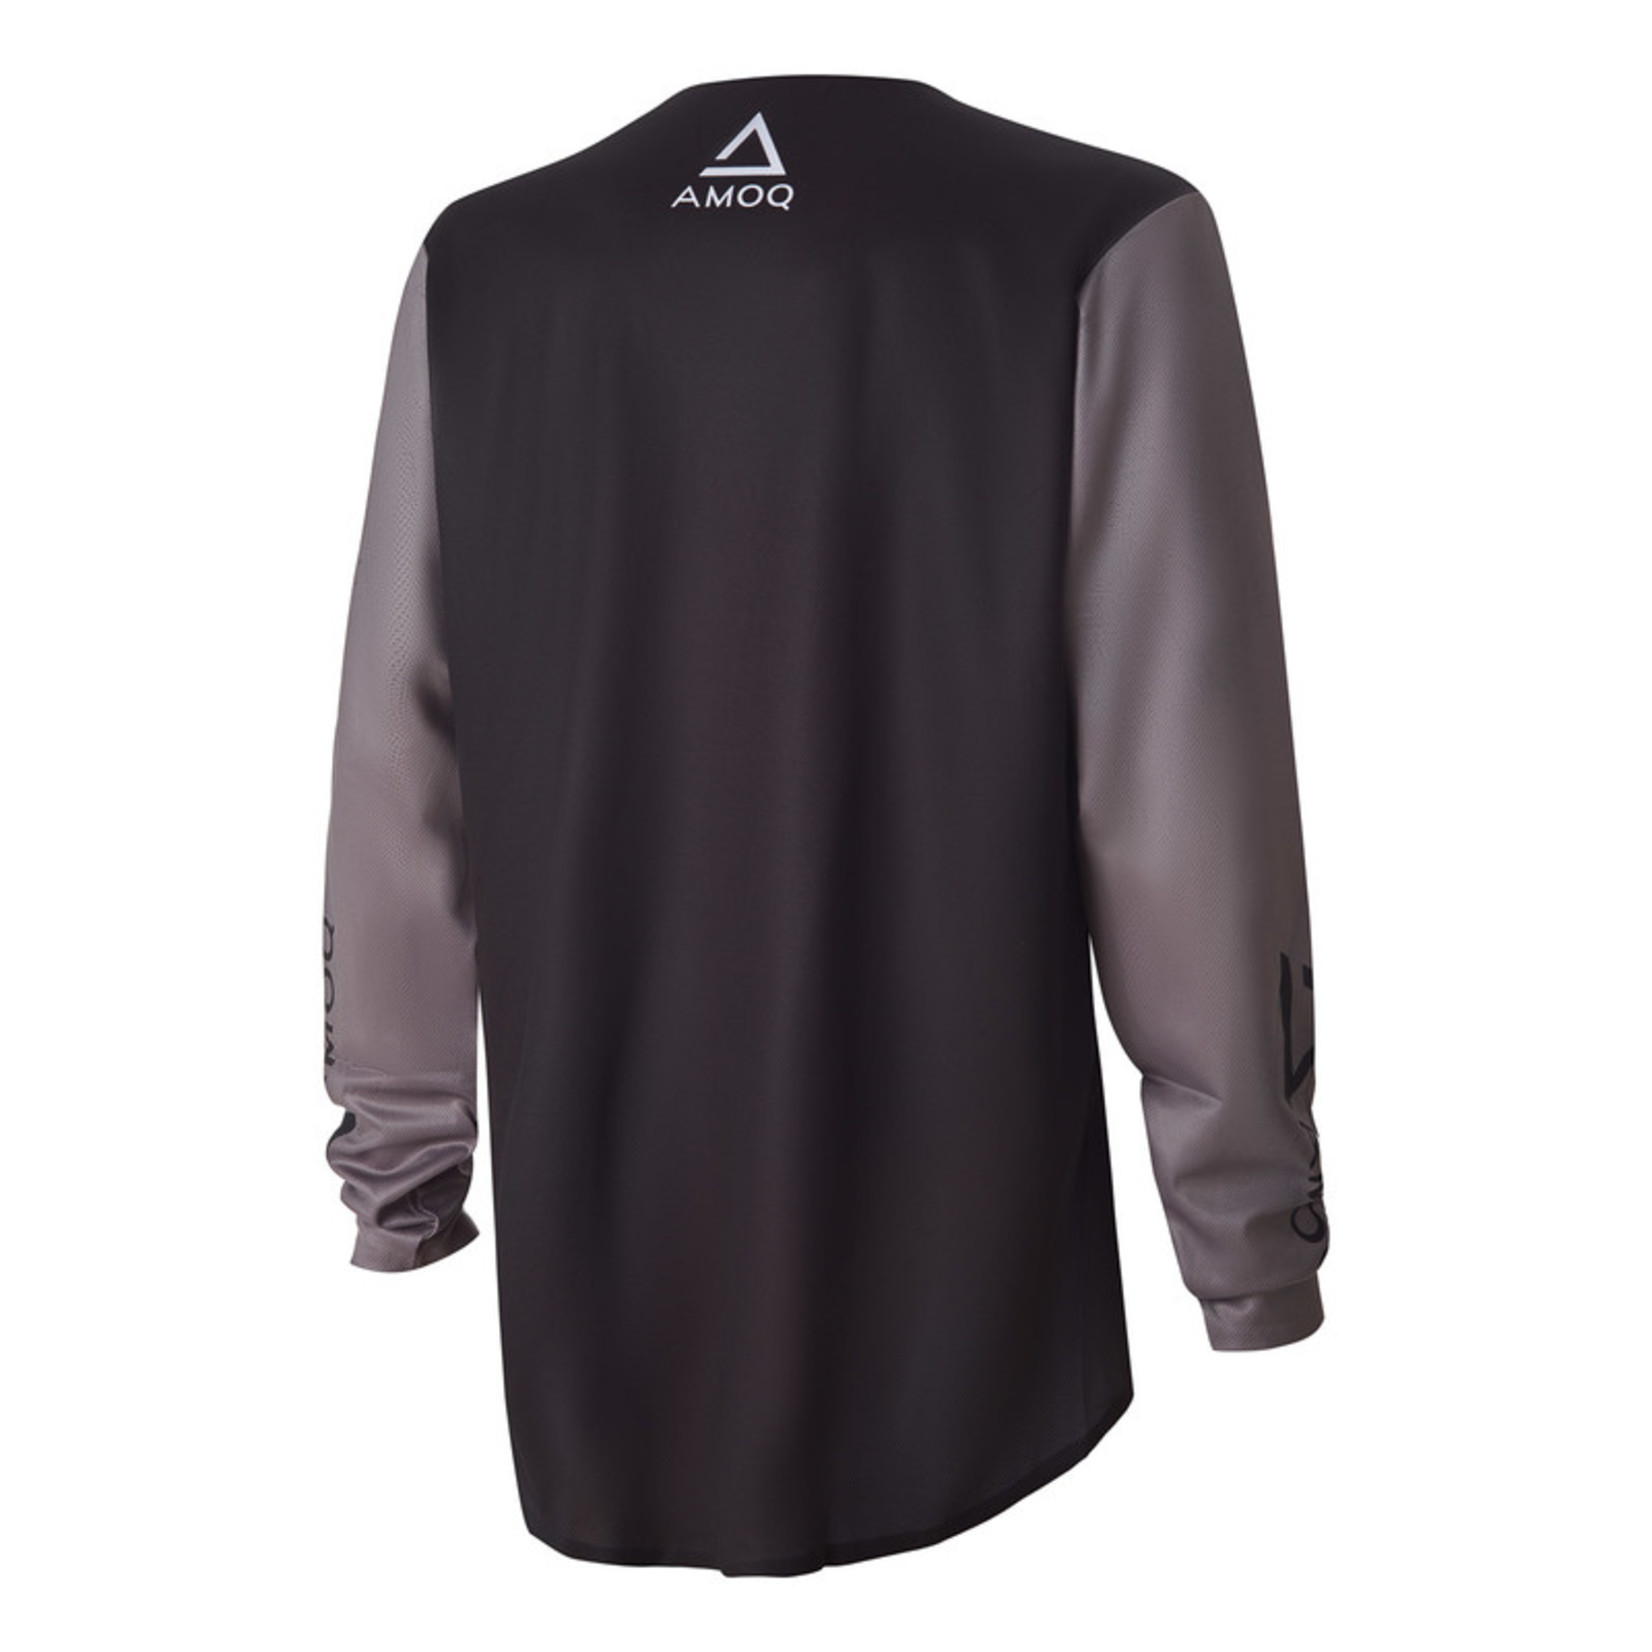 AMOQ AMOQ Ascent Comp Shirt Zwart/Grijs